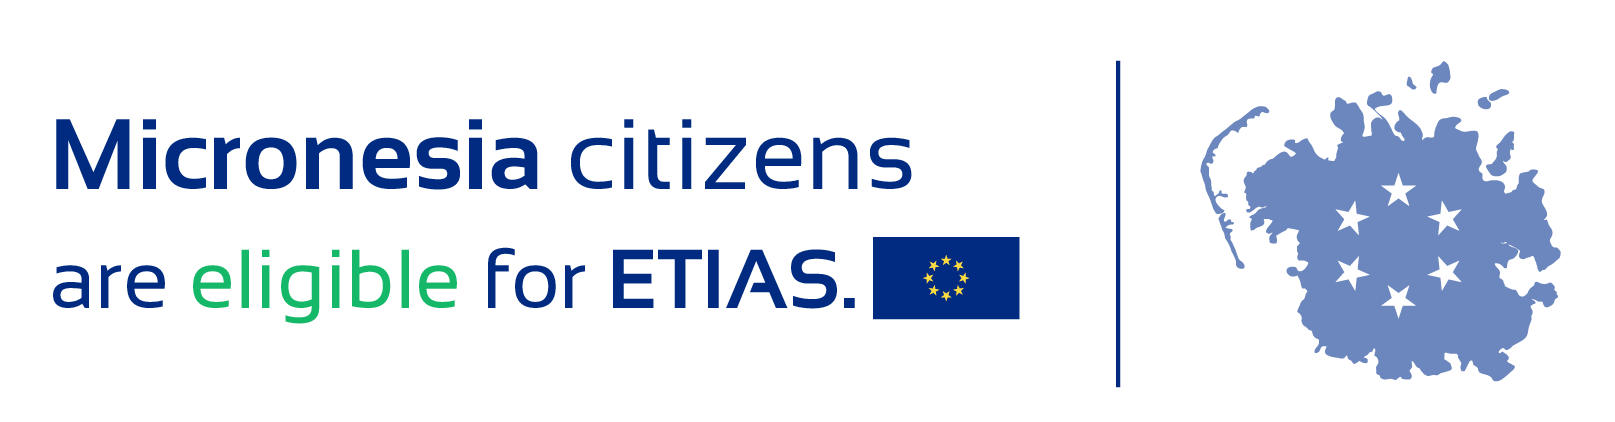 Micronesian citizens are eligible for ETIAS